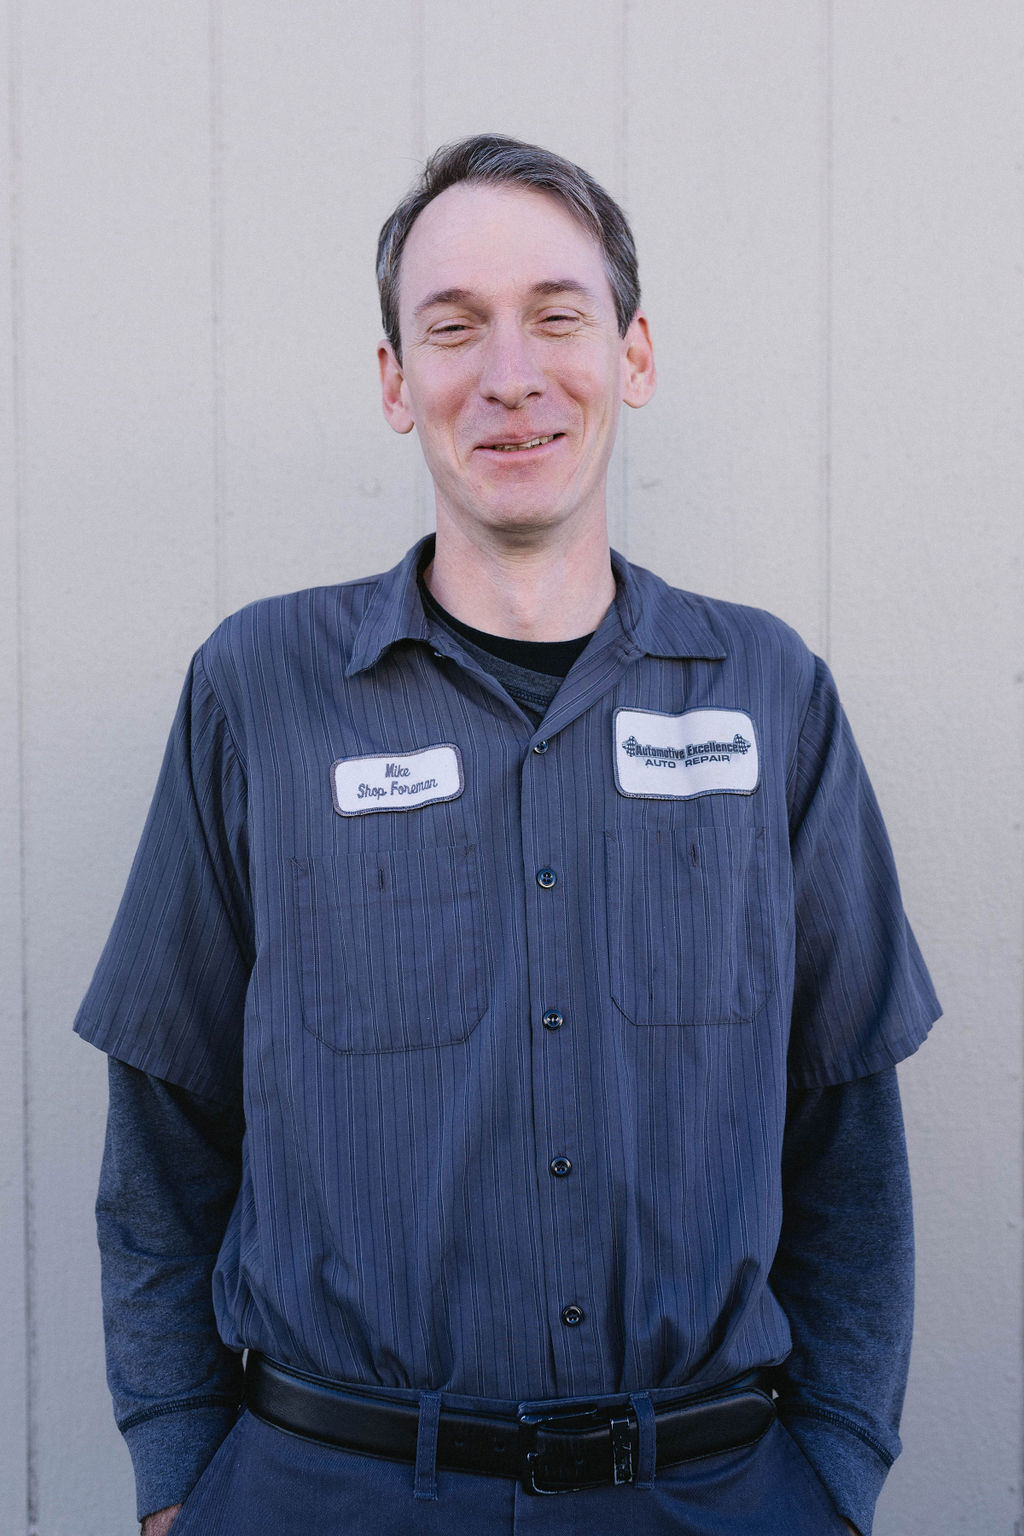 Mike - Shop Foreman/Service Technician